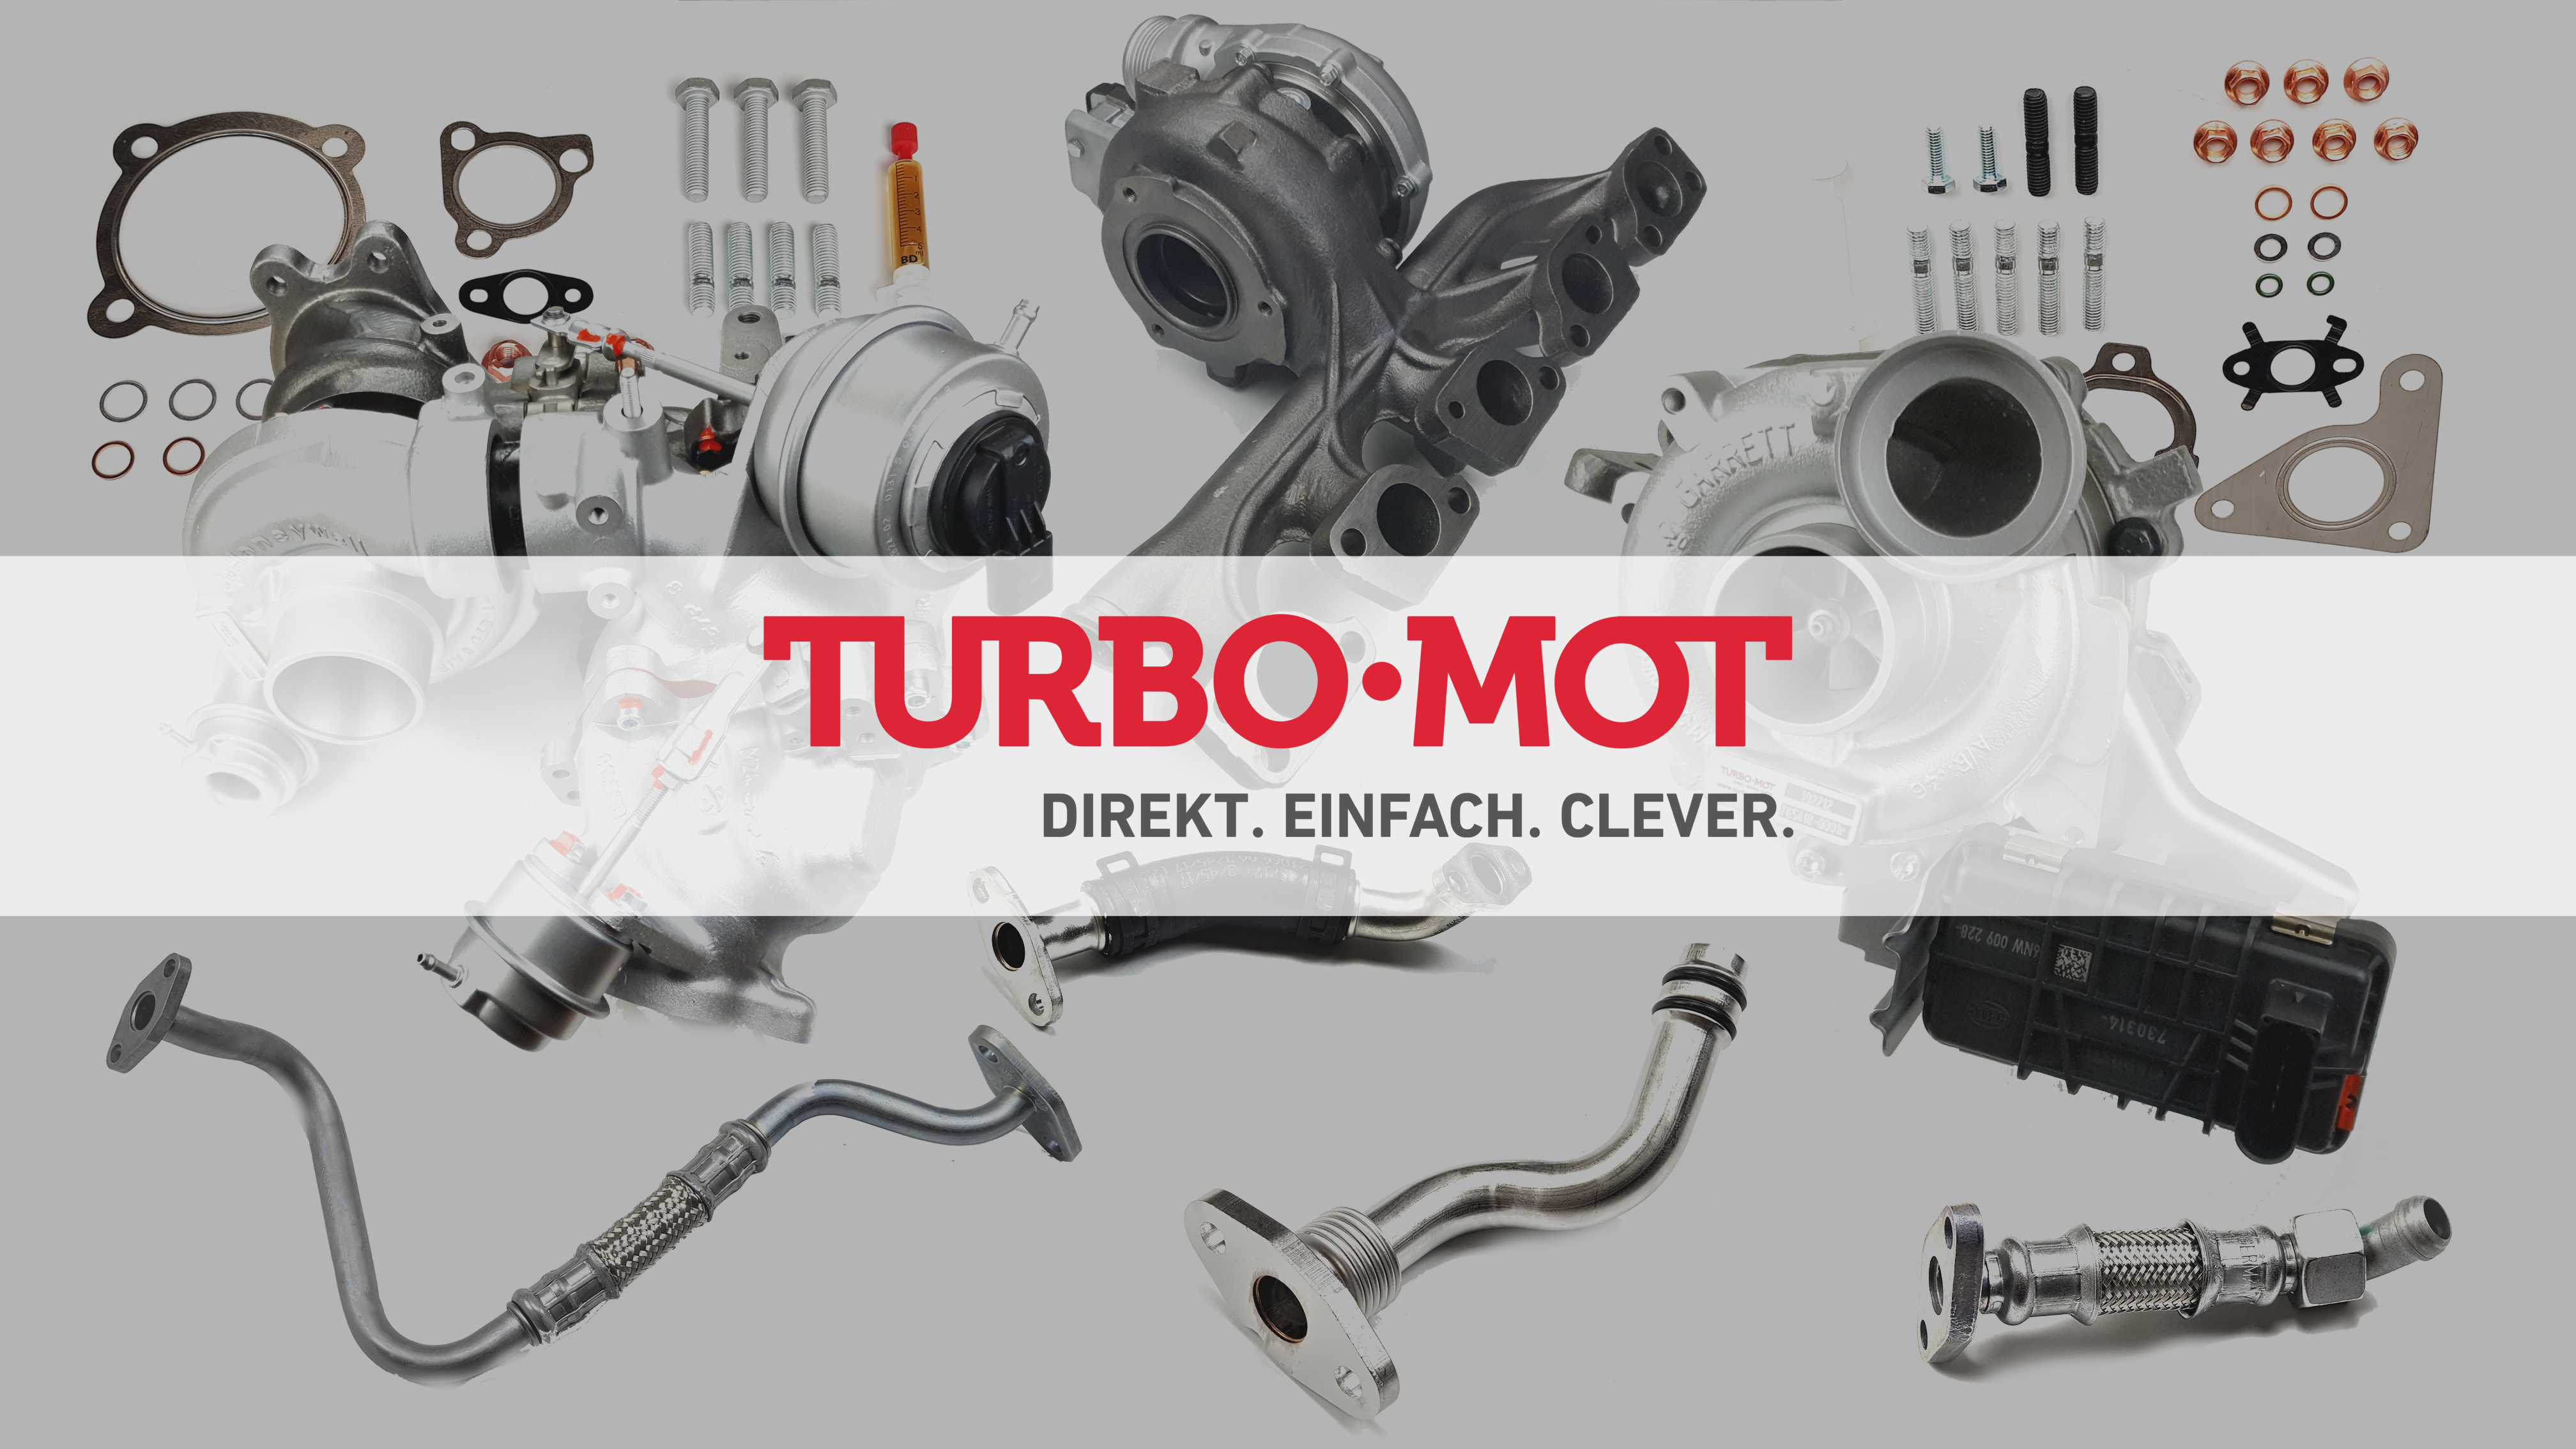 Bild 9 Turbo-Mot GmbH in Verl